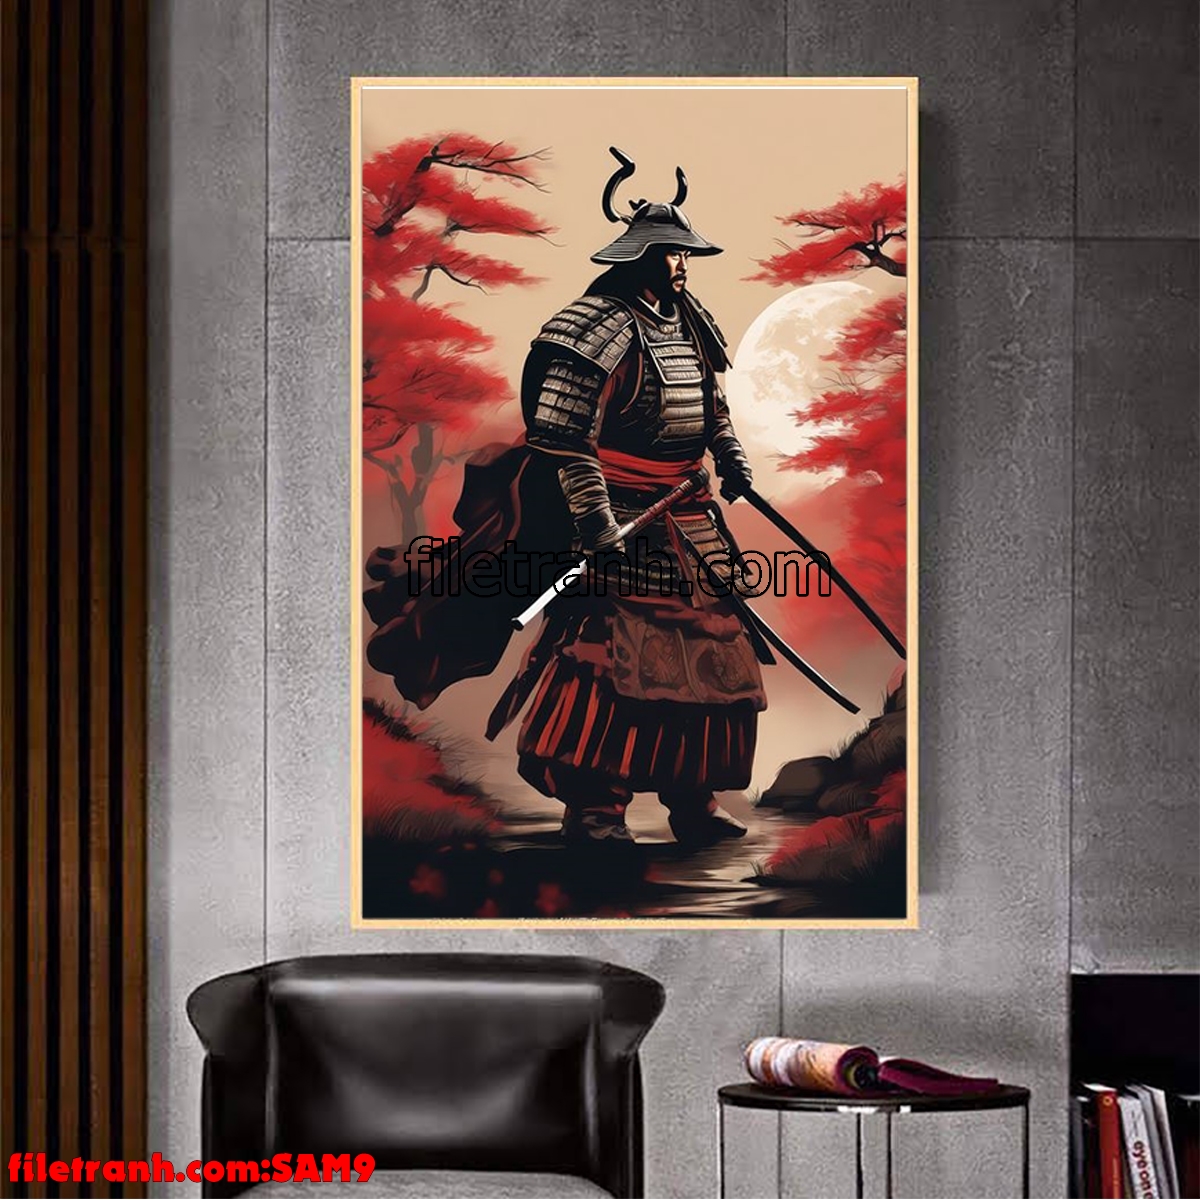 https://filetranh.com/tuong-nen/file-tranh-samurai-vo-si-nhat-ban-sam9.html